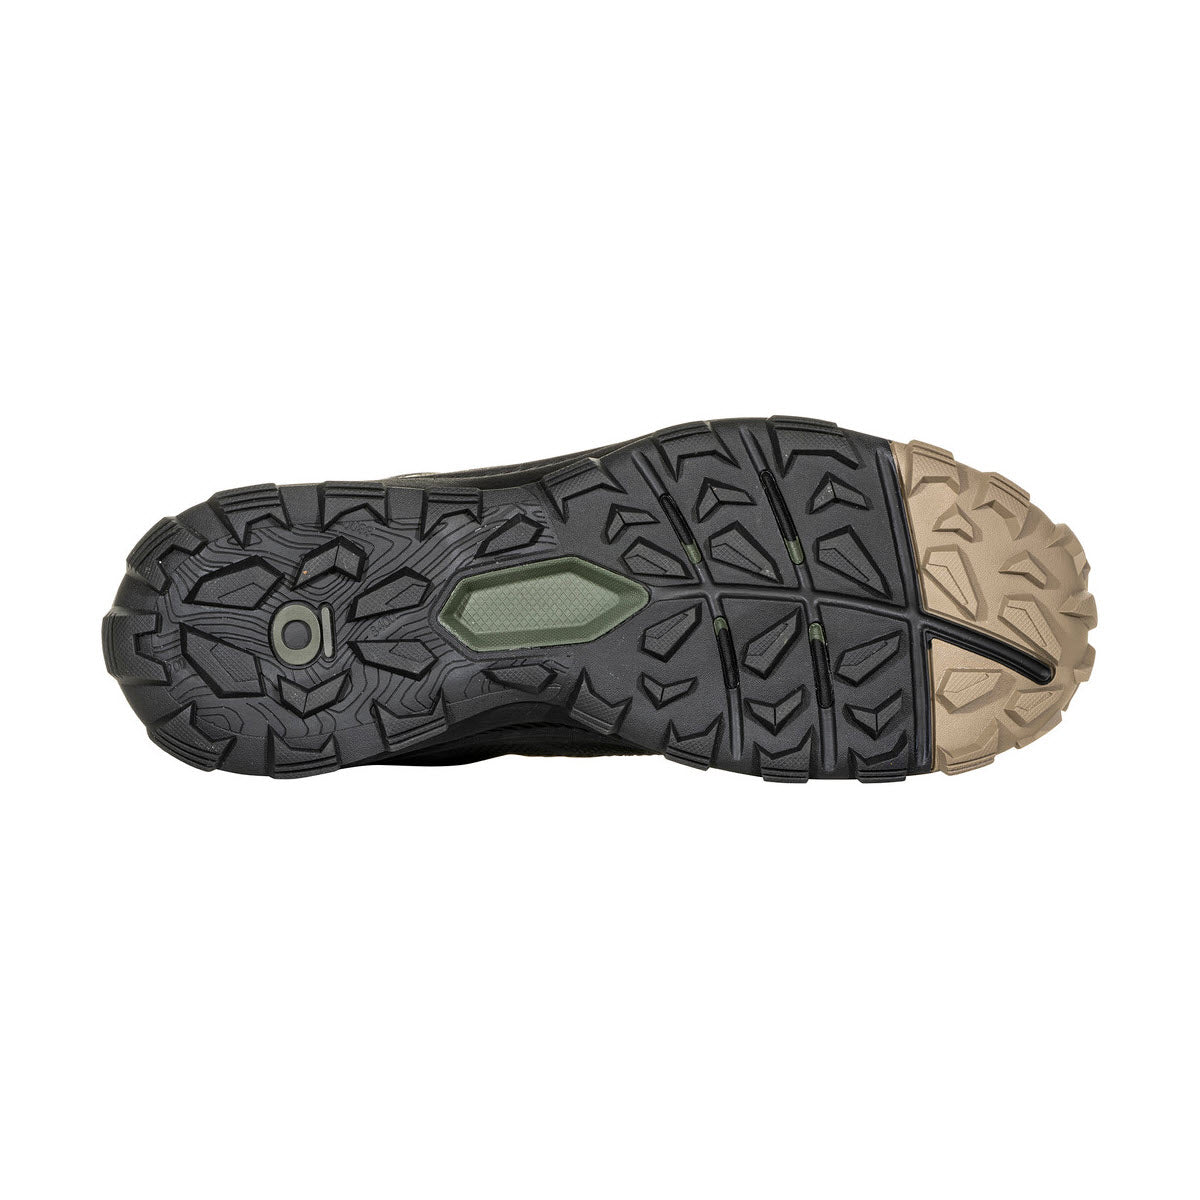 Sole of an Oboz Katabatic Low B-Dry Evergreen hiking shoe displaying multi-terrain tread patterns.